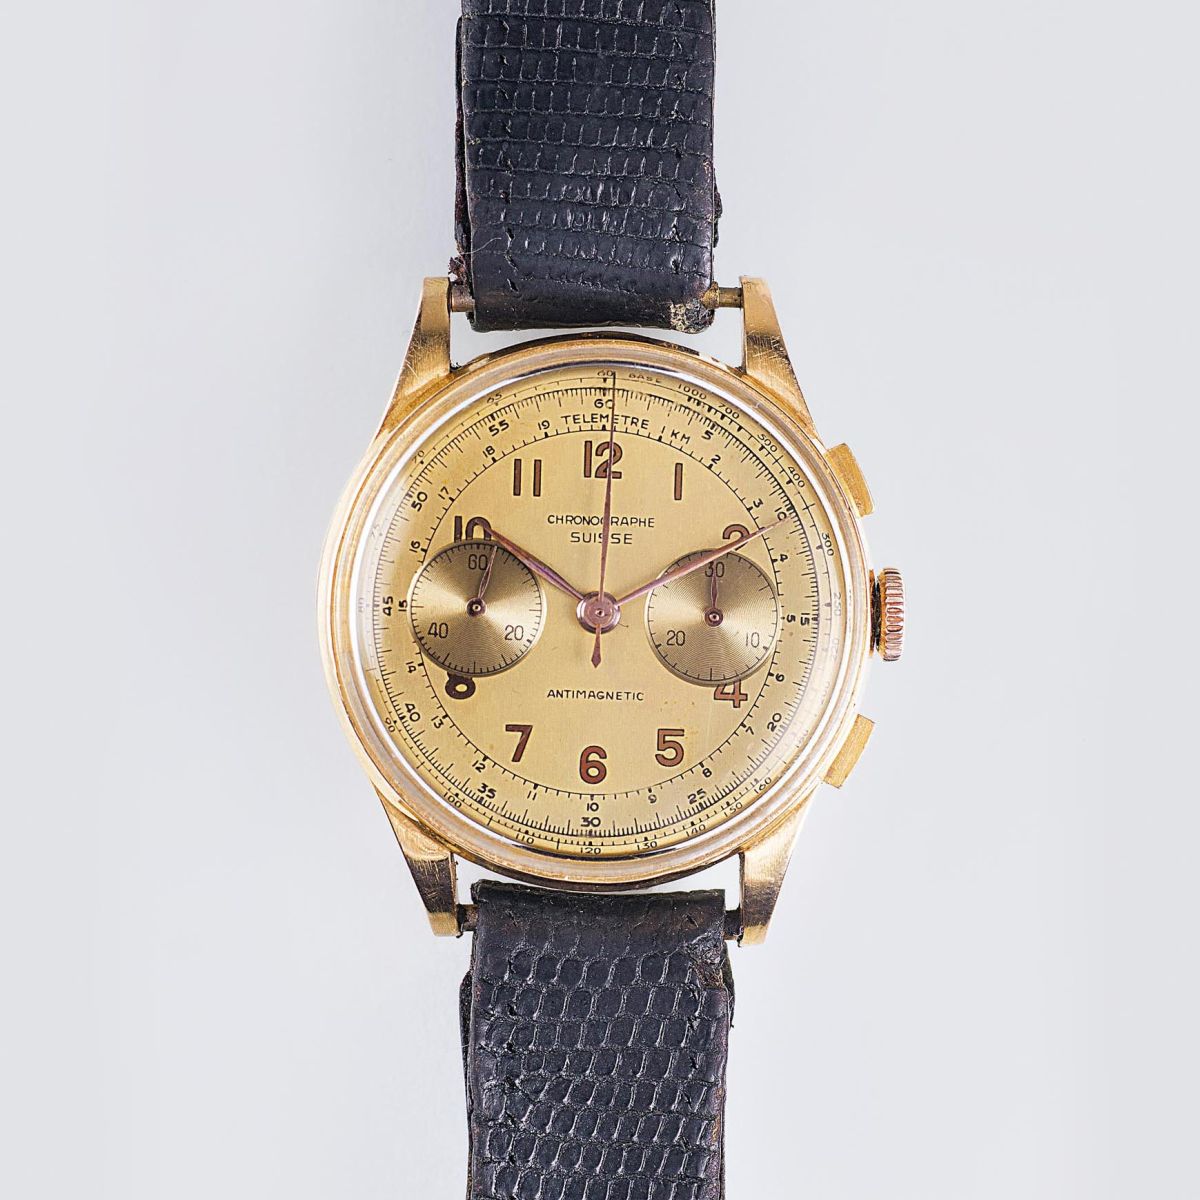 A Vintage Gentlemen's Watch 'Chronographe Suisse'